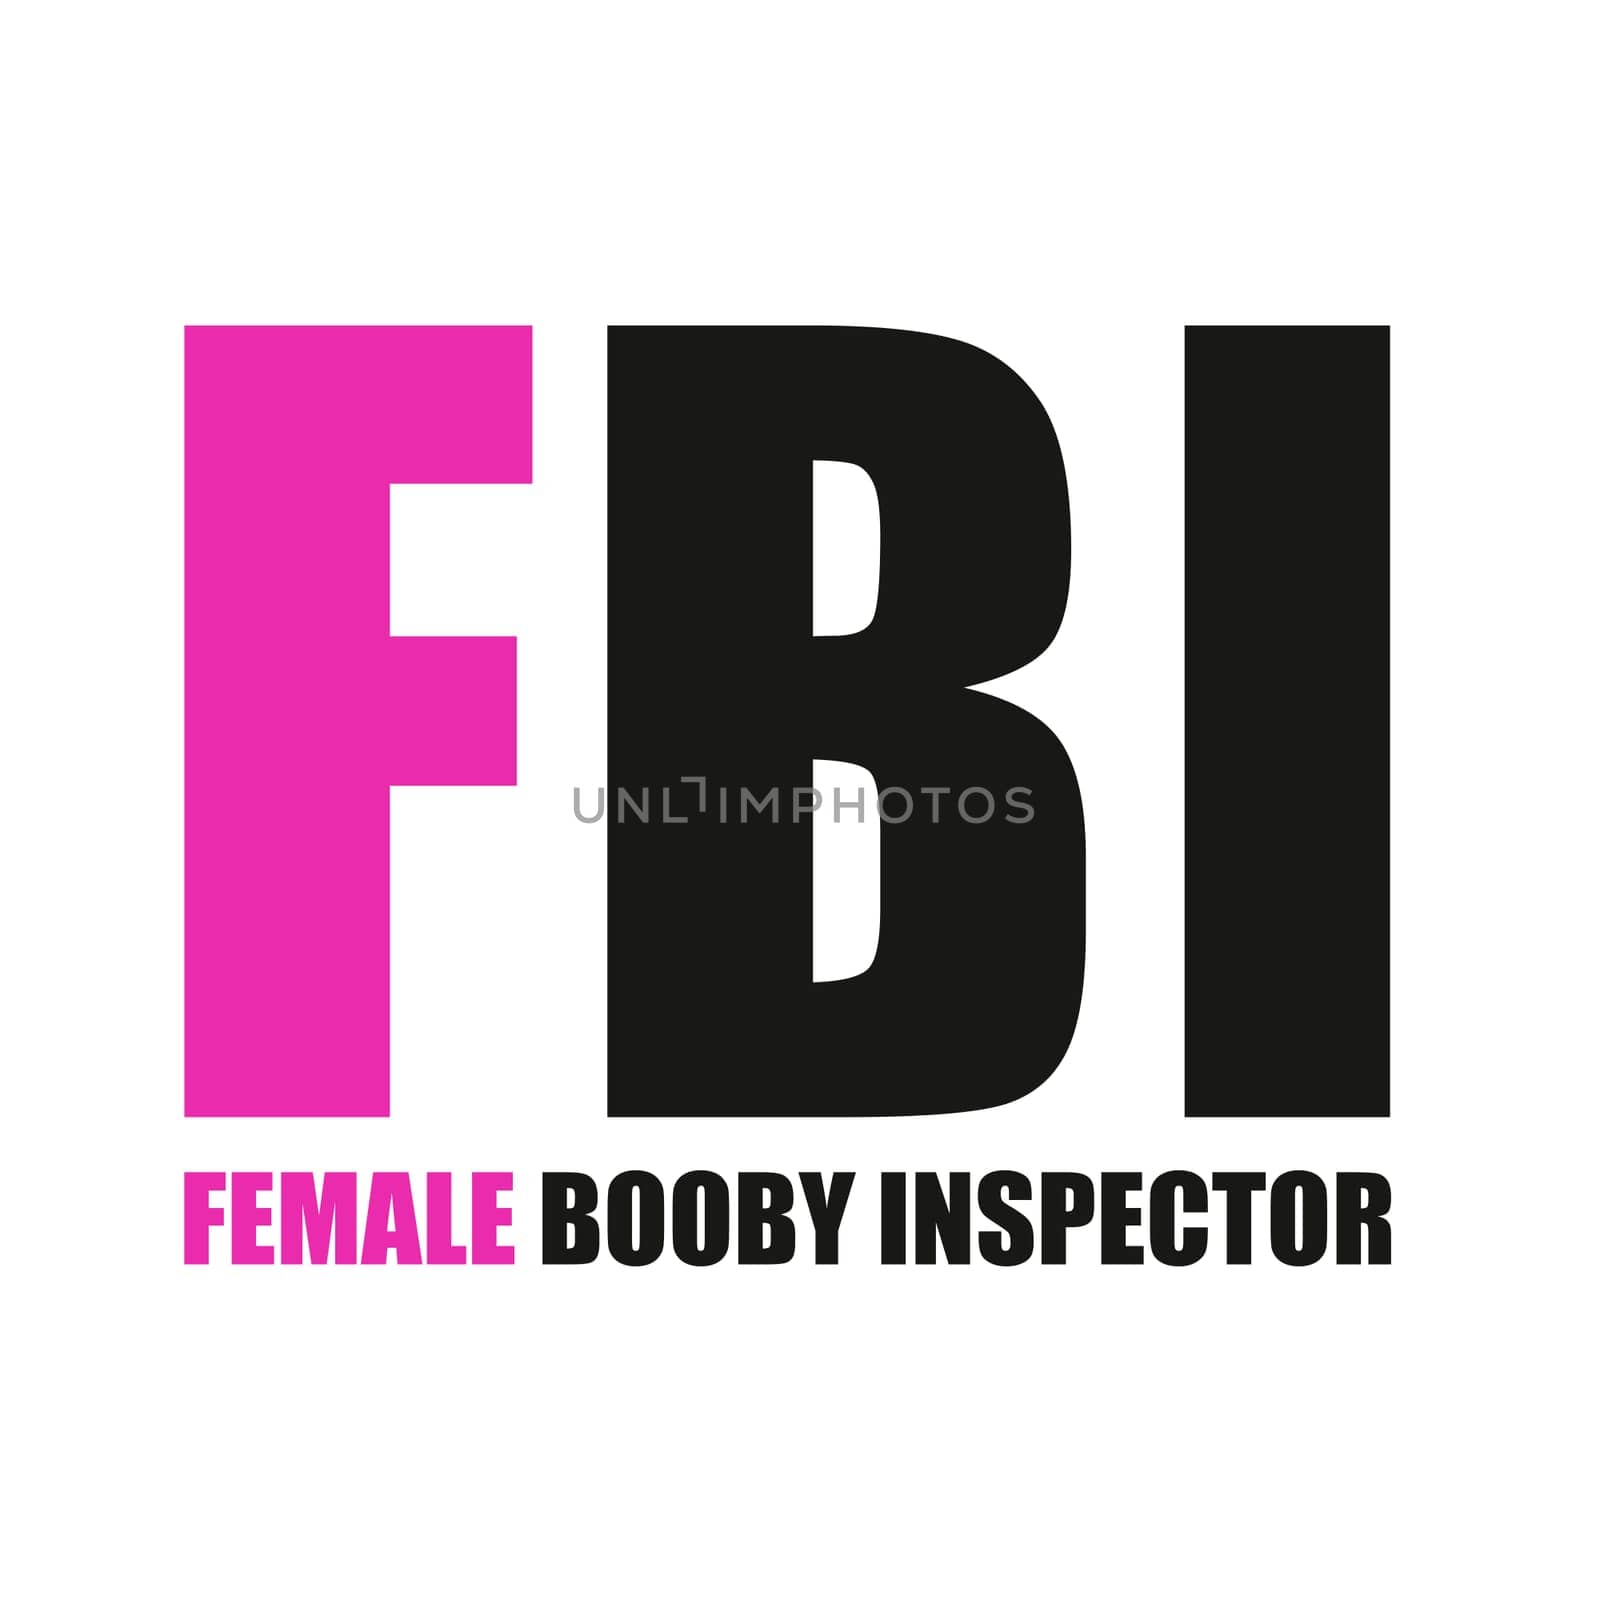 FBI Female Booby Inspector